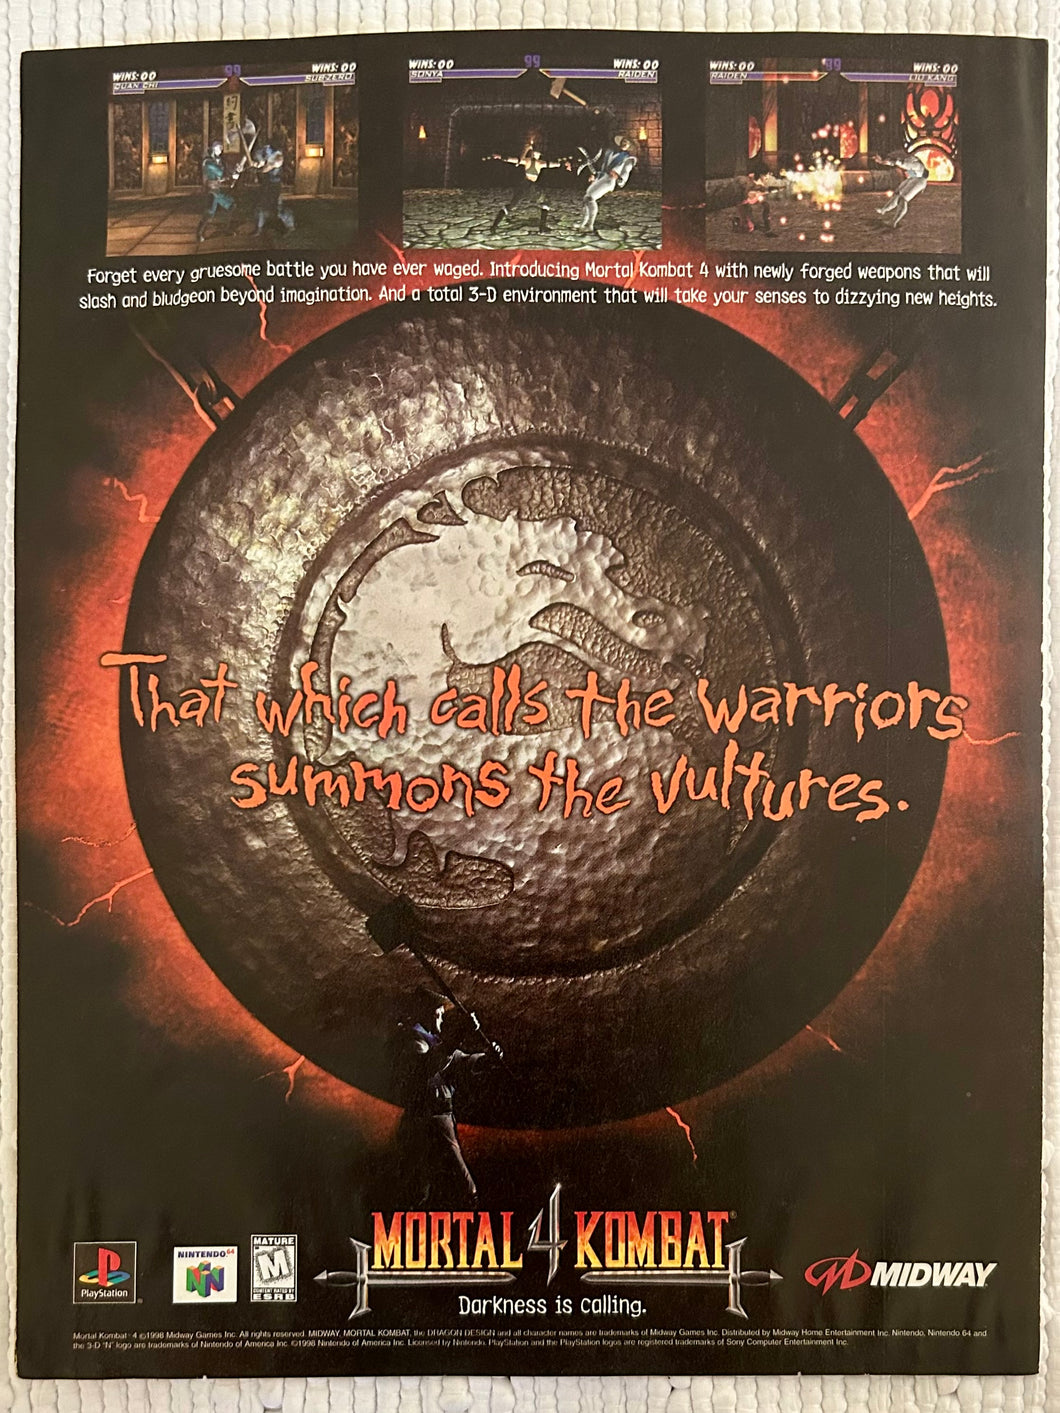 Mortal Kombat 4 - PlayStation N64 - Original Vintage Advertisement - Print Ads - Laminated A4 Poster